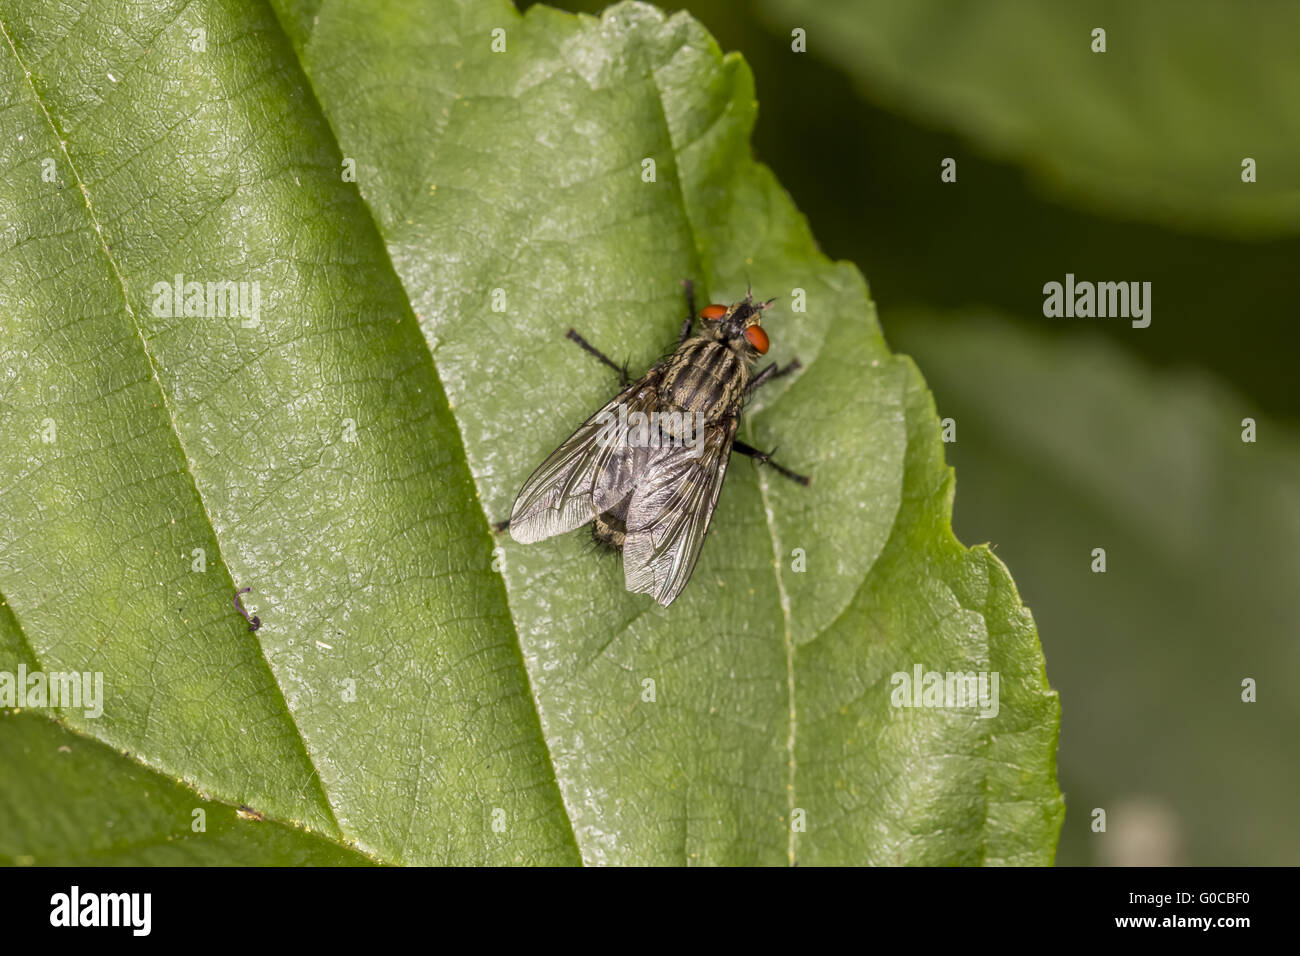 Sarcophaga carnaria, Common flesh fly, Germany Stock Photo